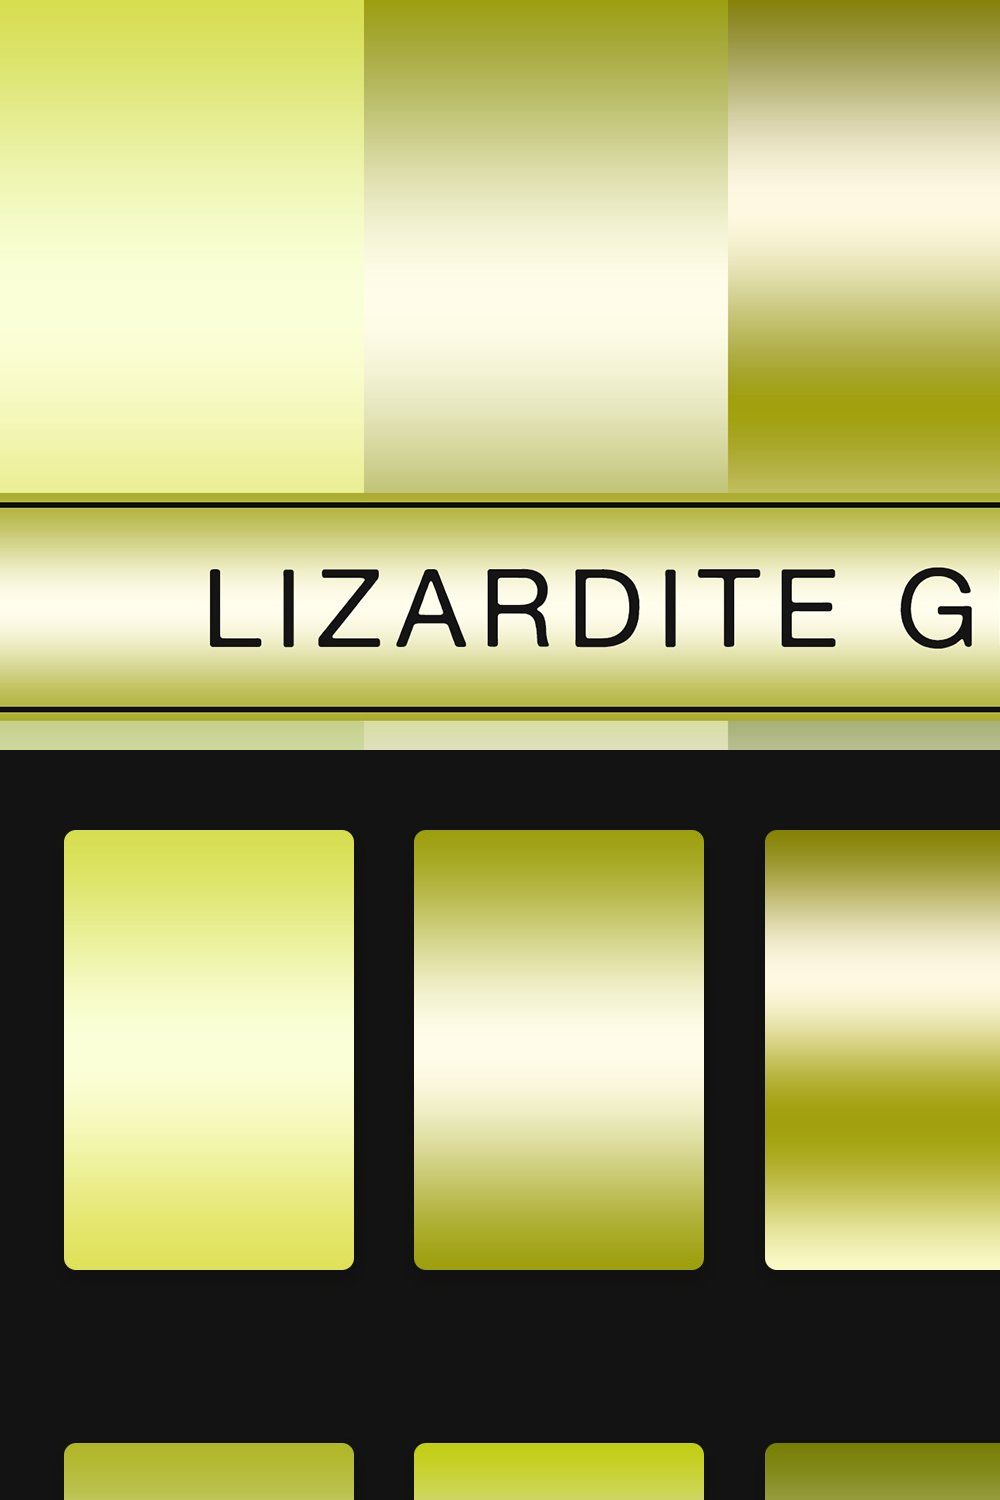 Lizardite Gradients pinterest preview image.